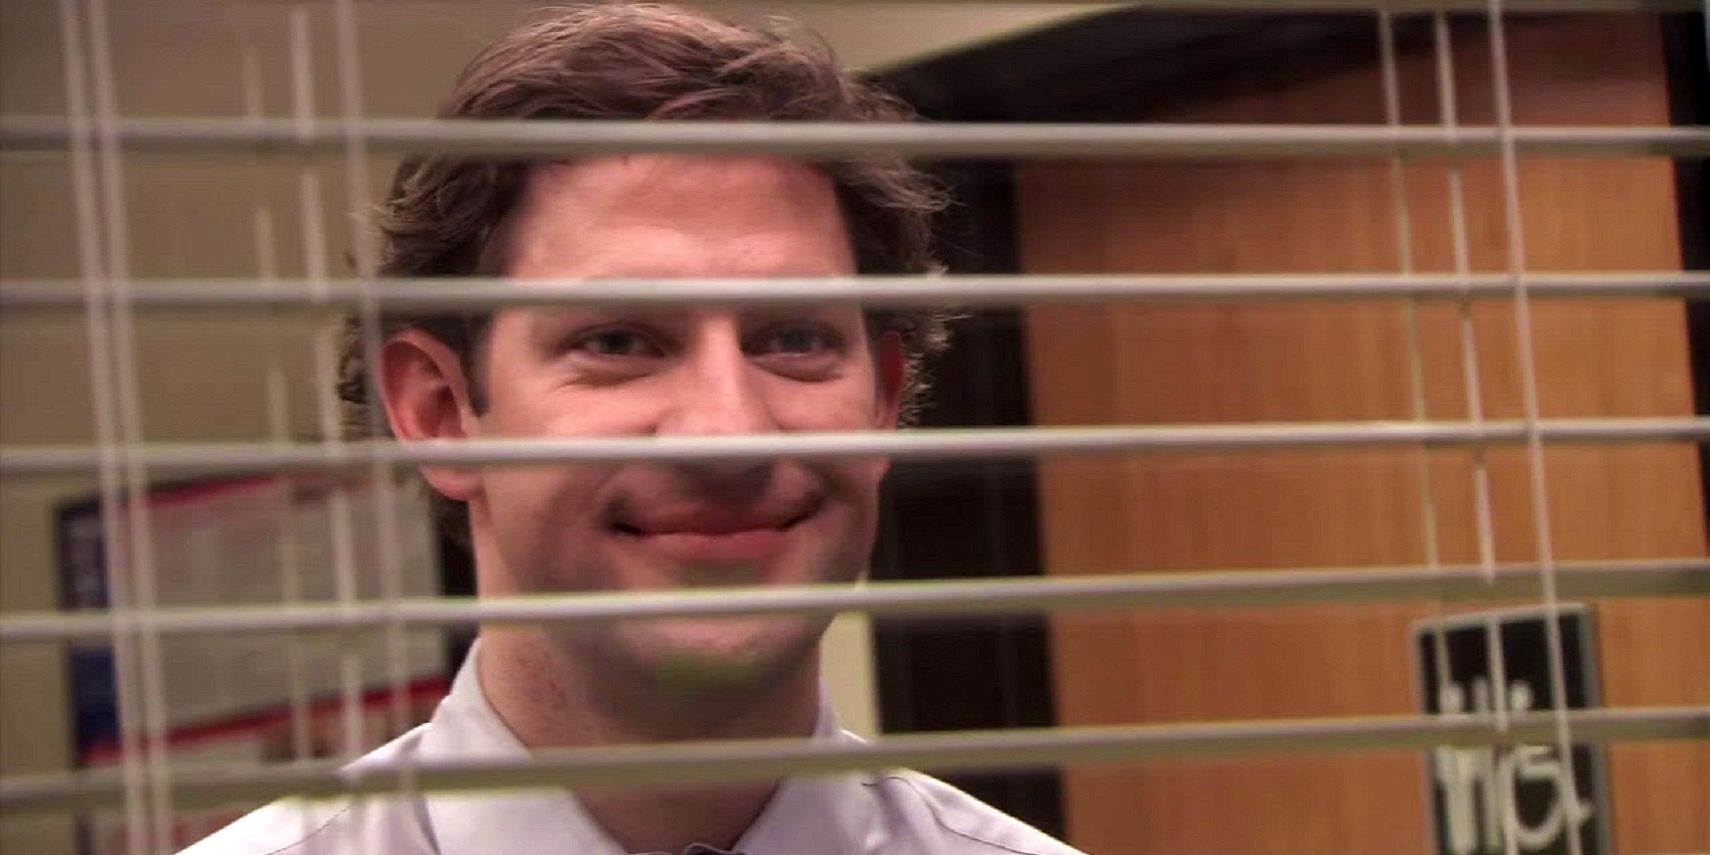 John Krasinski as Jim Halpert looking through window blinds and smiling in The Office